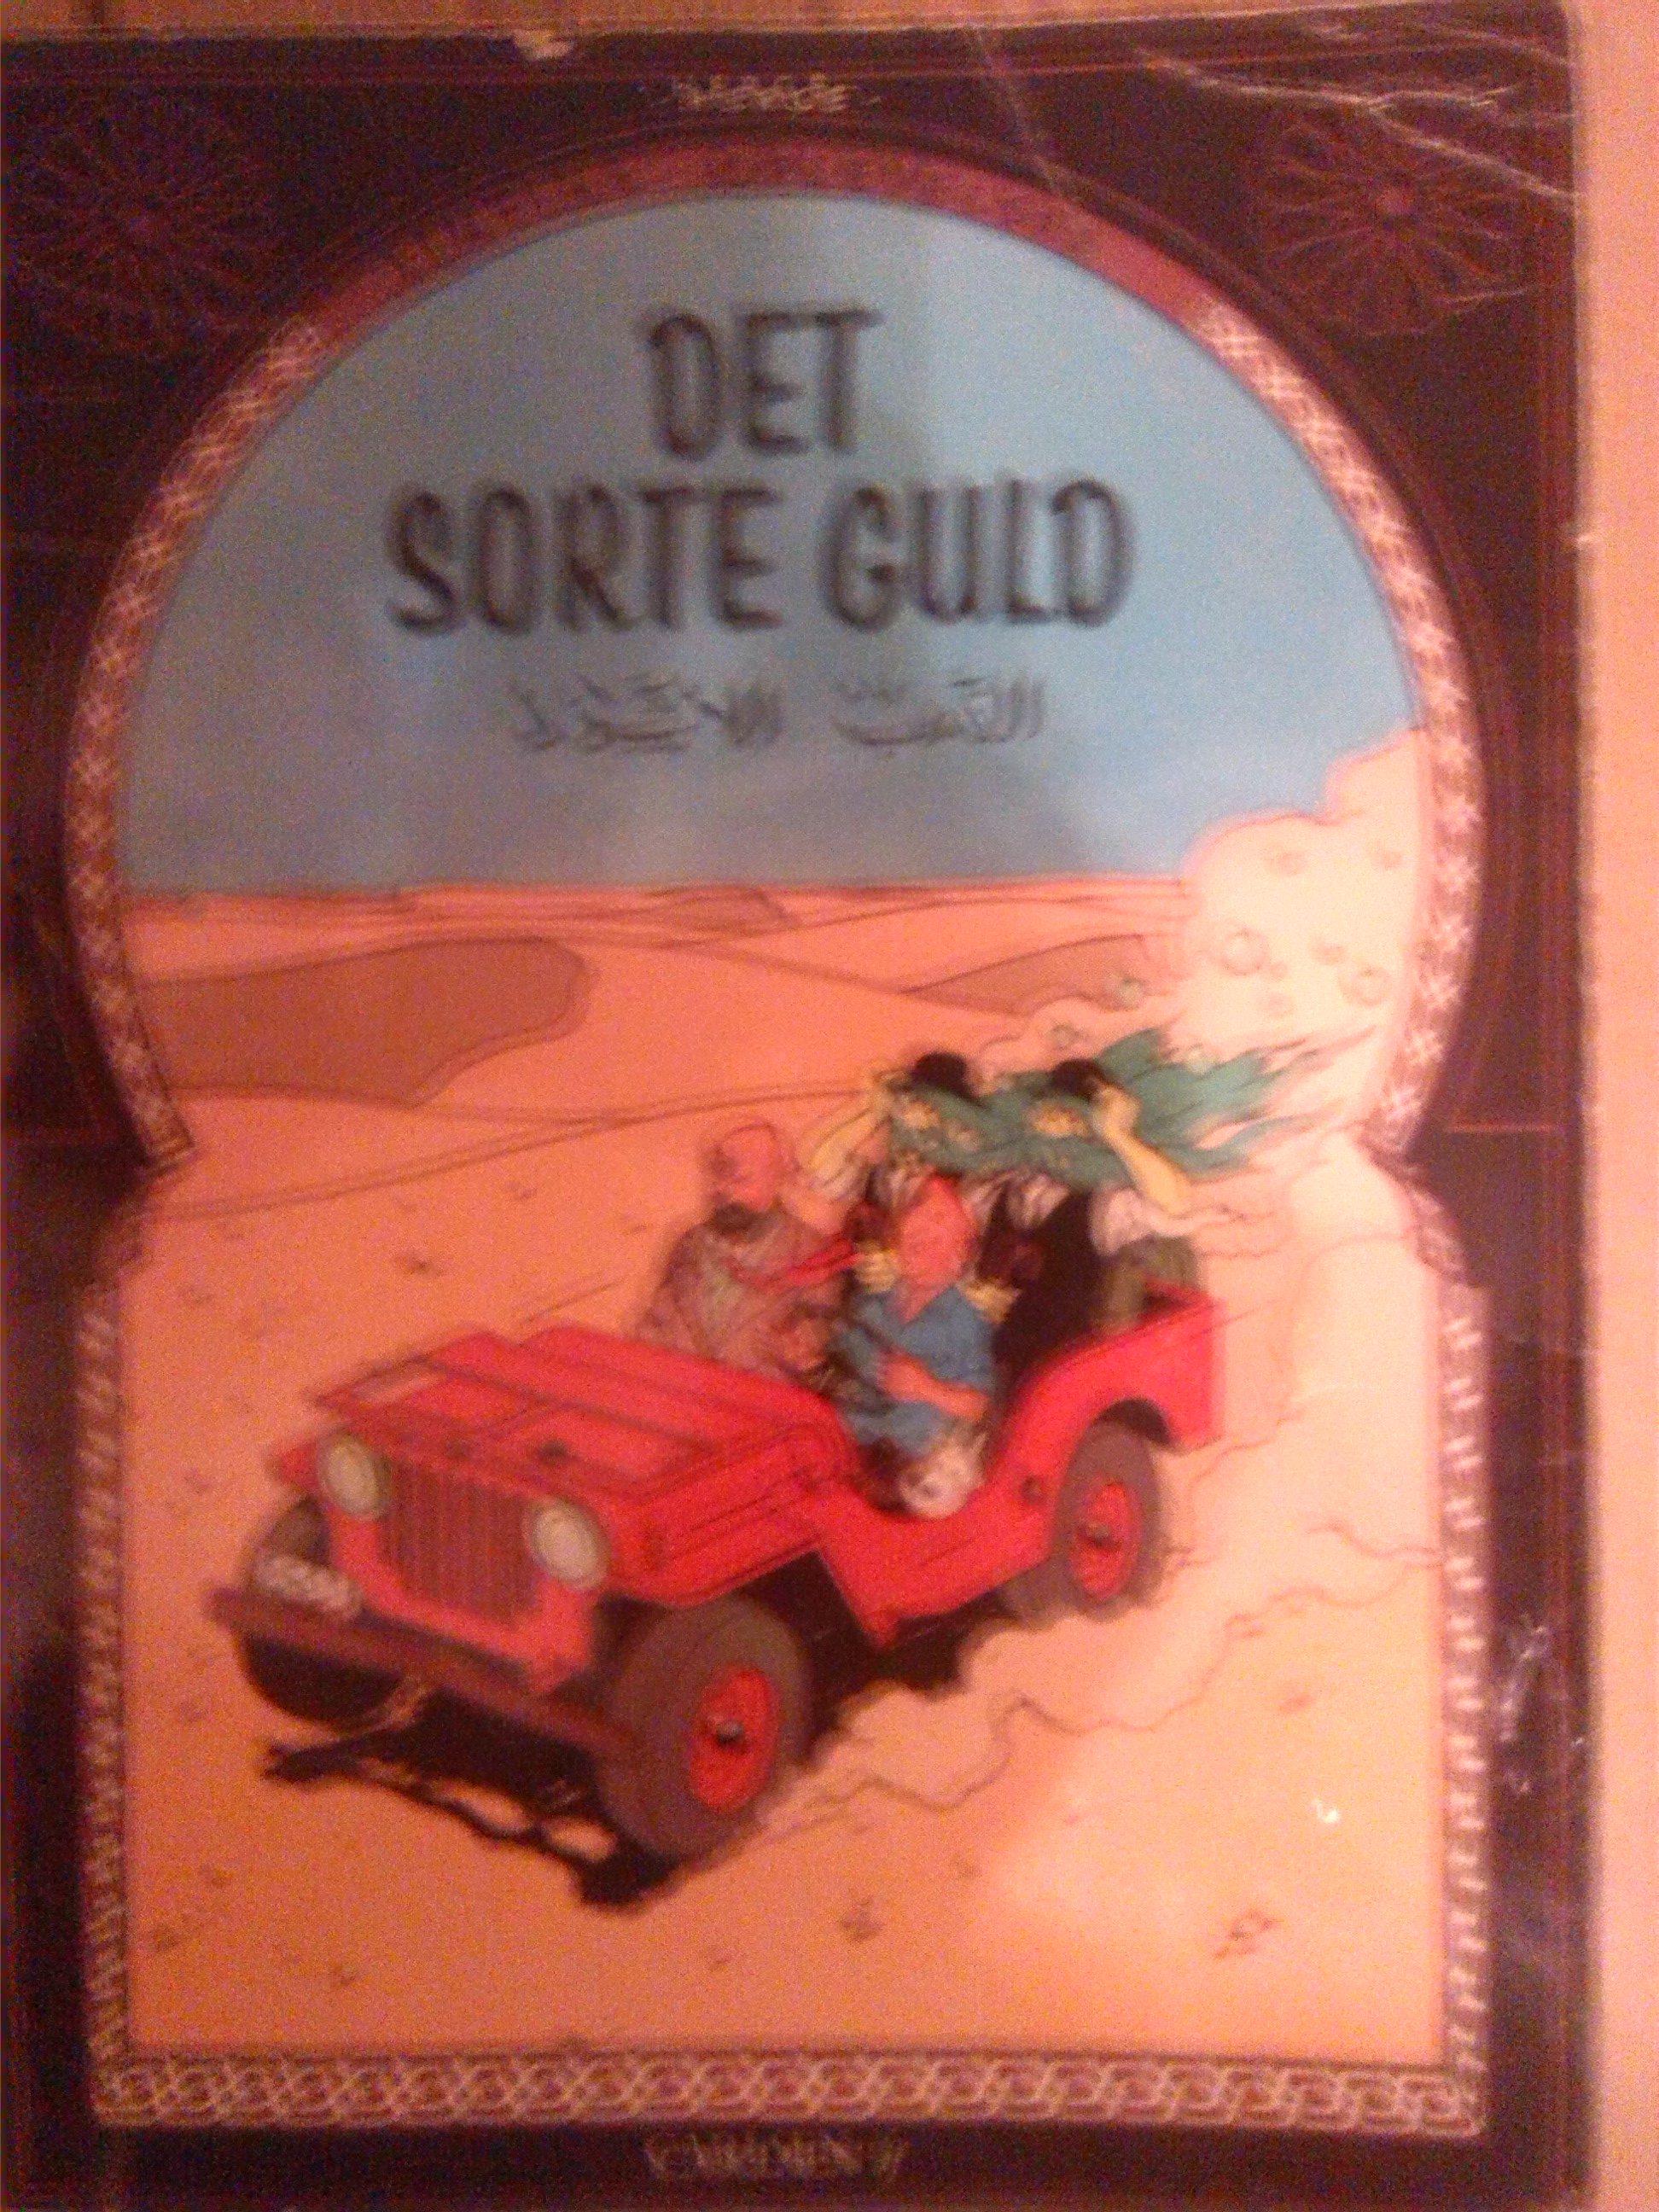 Tintin nr 6 : Det sorte guld